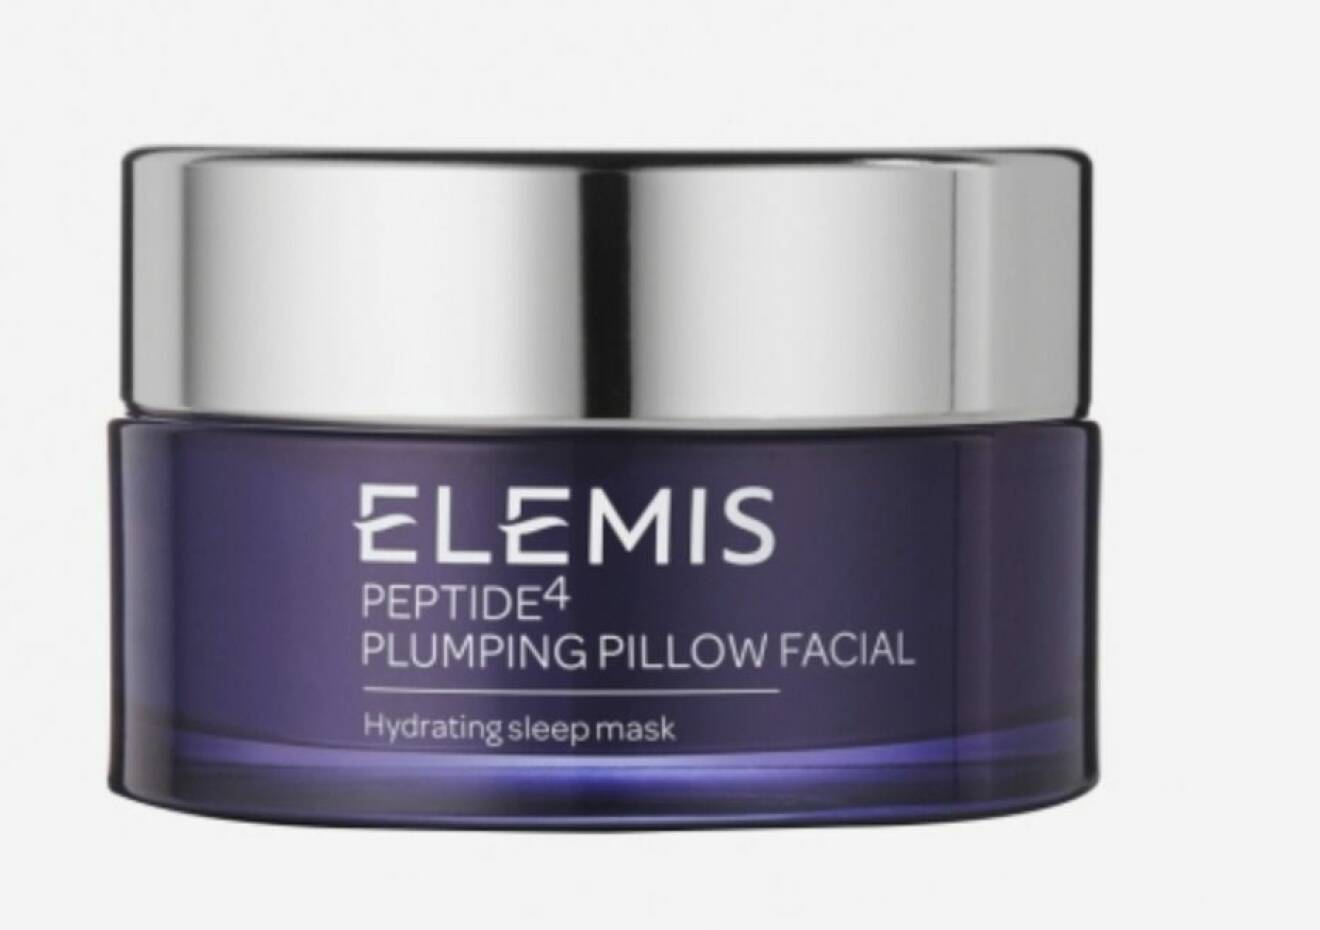 Peptide4 plumping pillow facial från Elemis